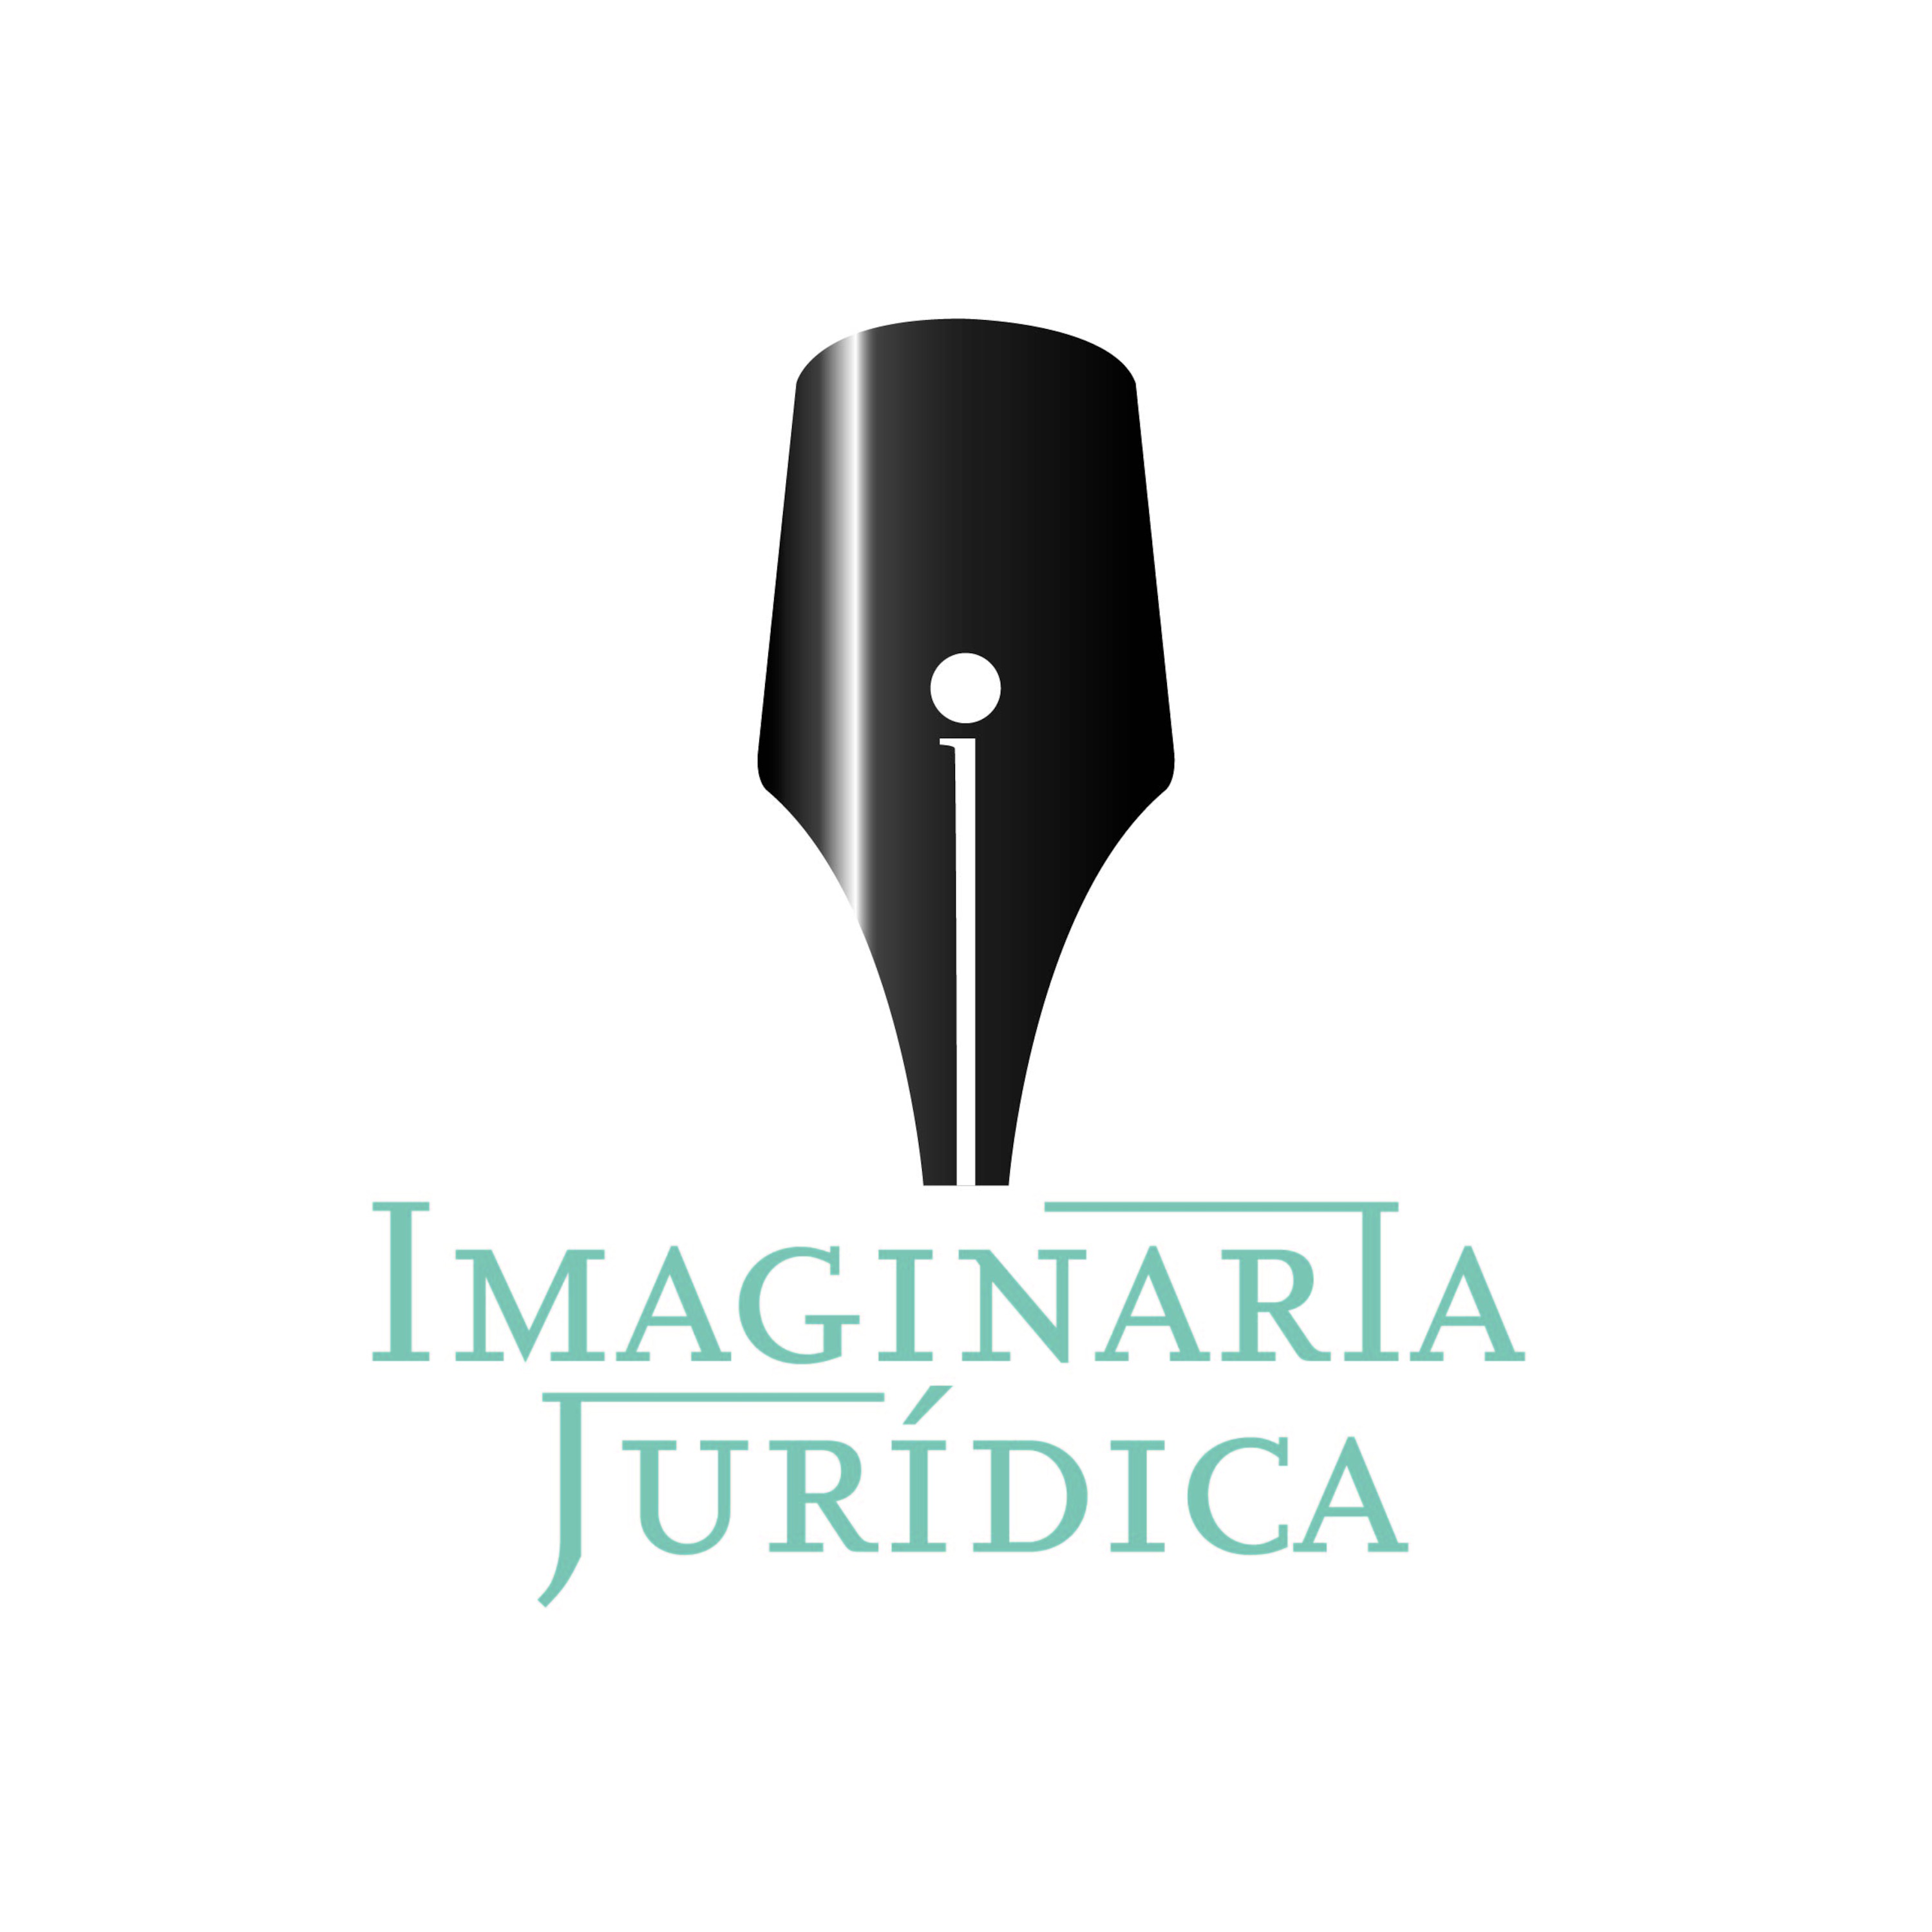 Imaginaria Jurídica